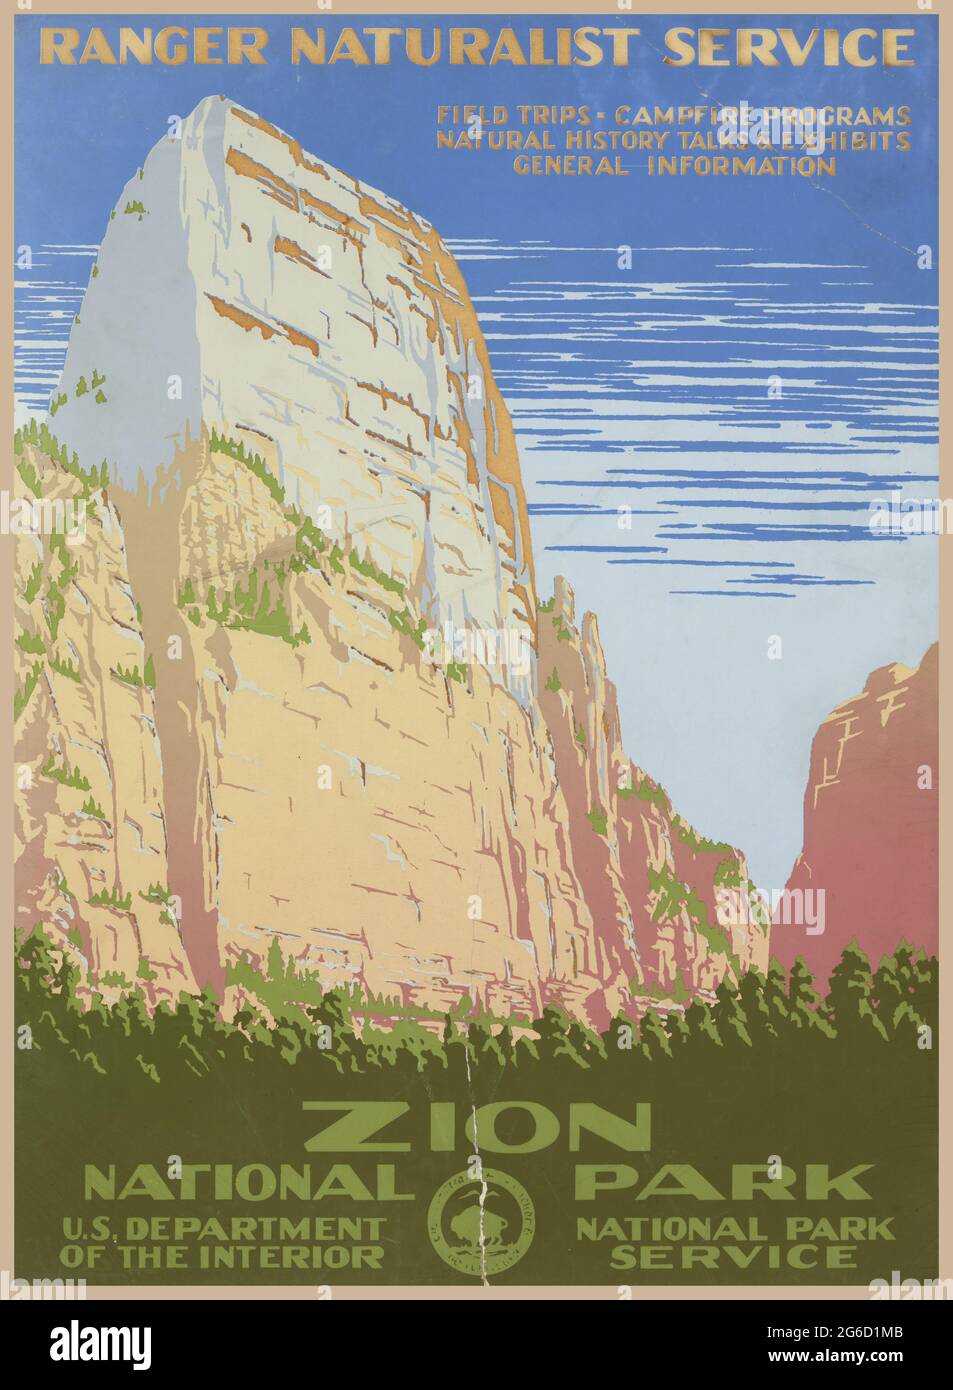 Zion National Park Ranger Naturalist Vintage Style Travel Poster 1938 Stock Photo